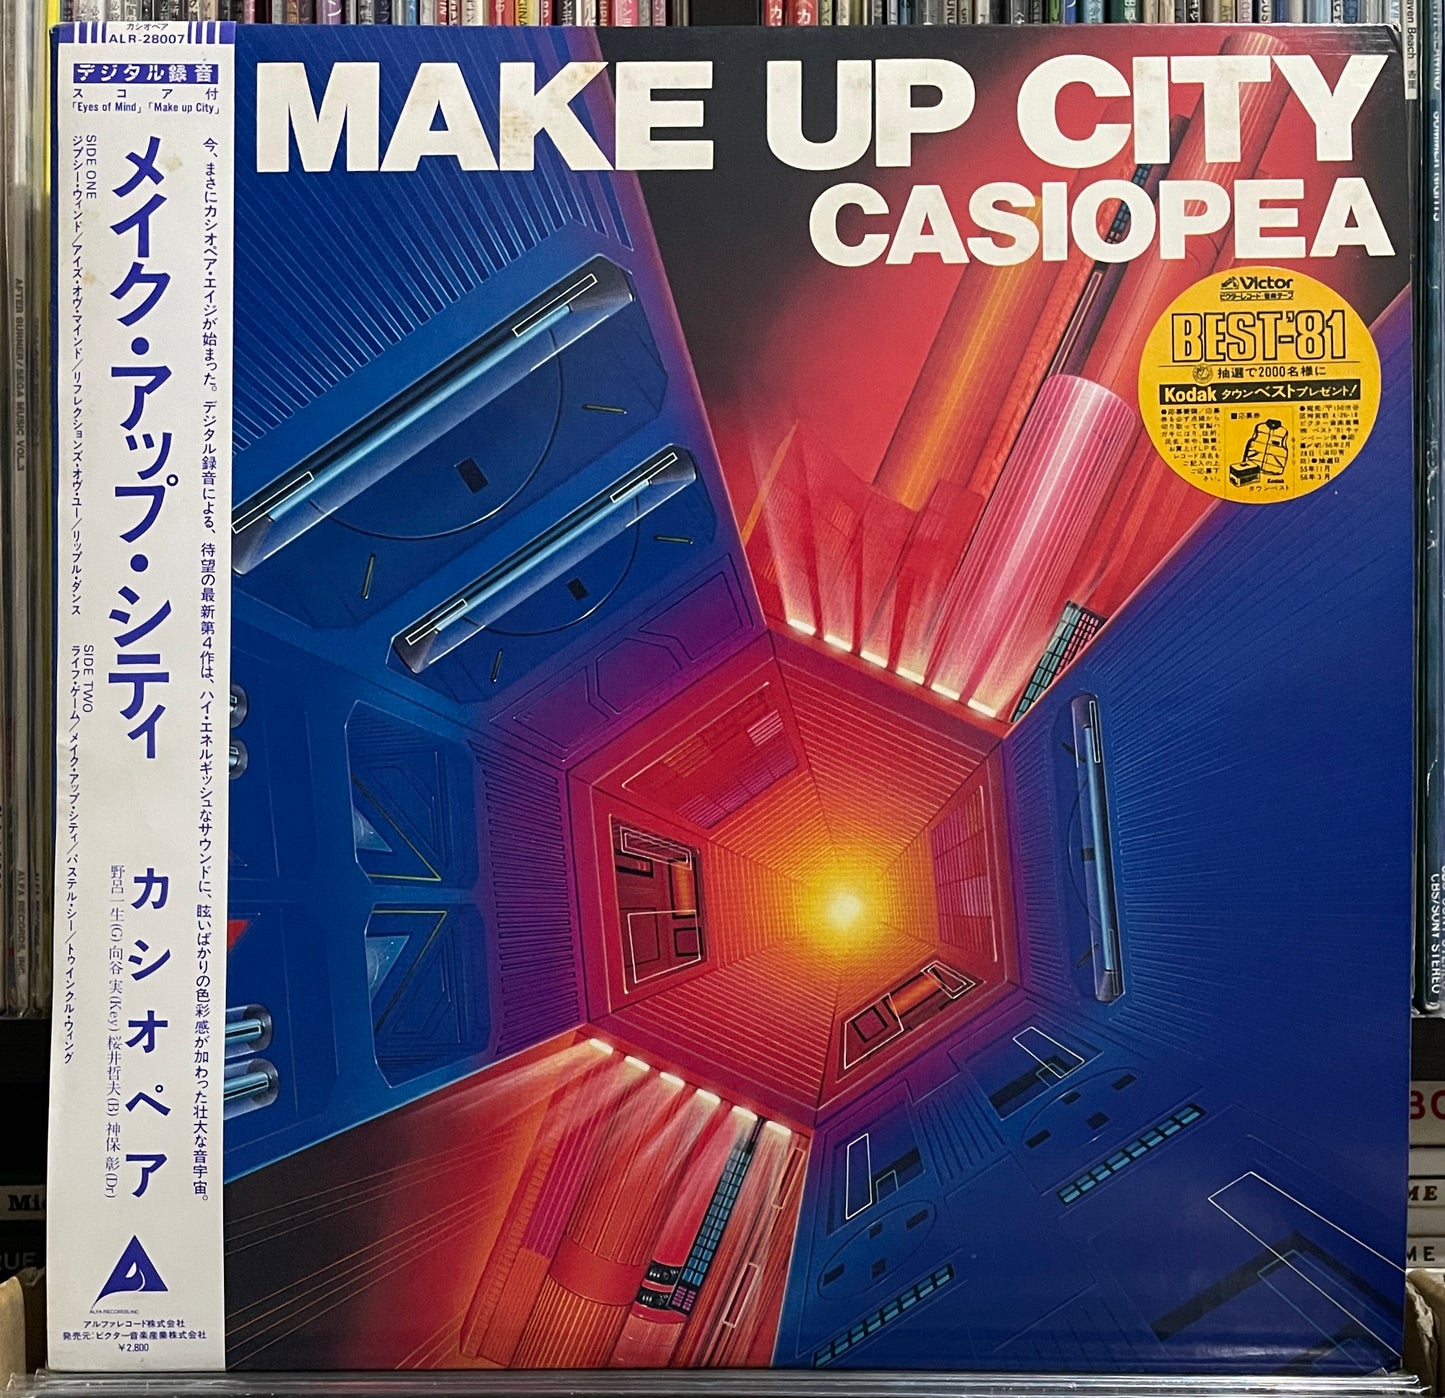 Casiopea “Make Up City” (1980)